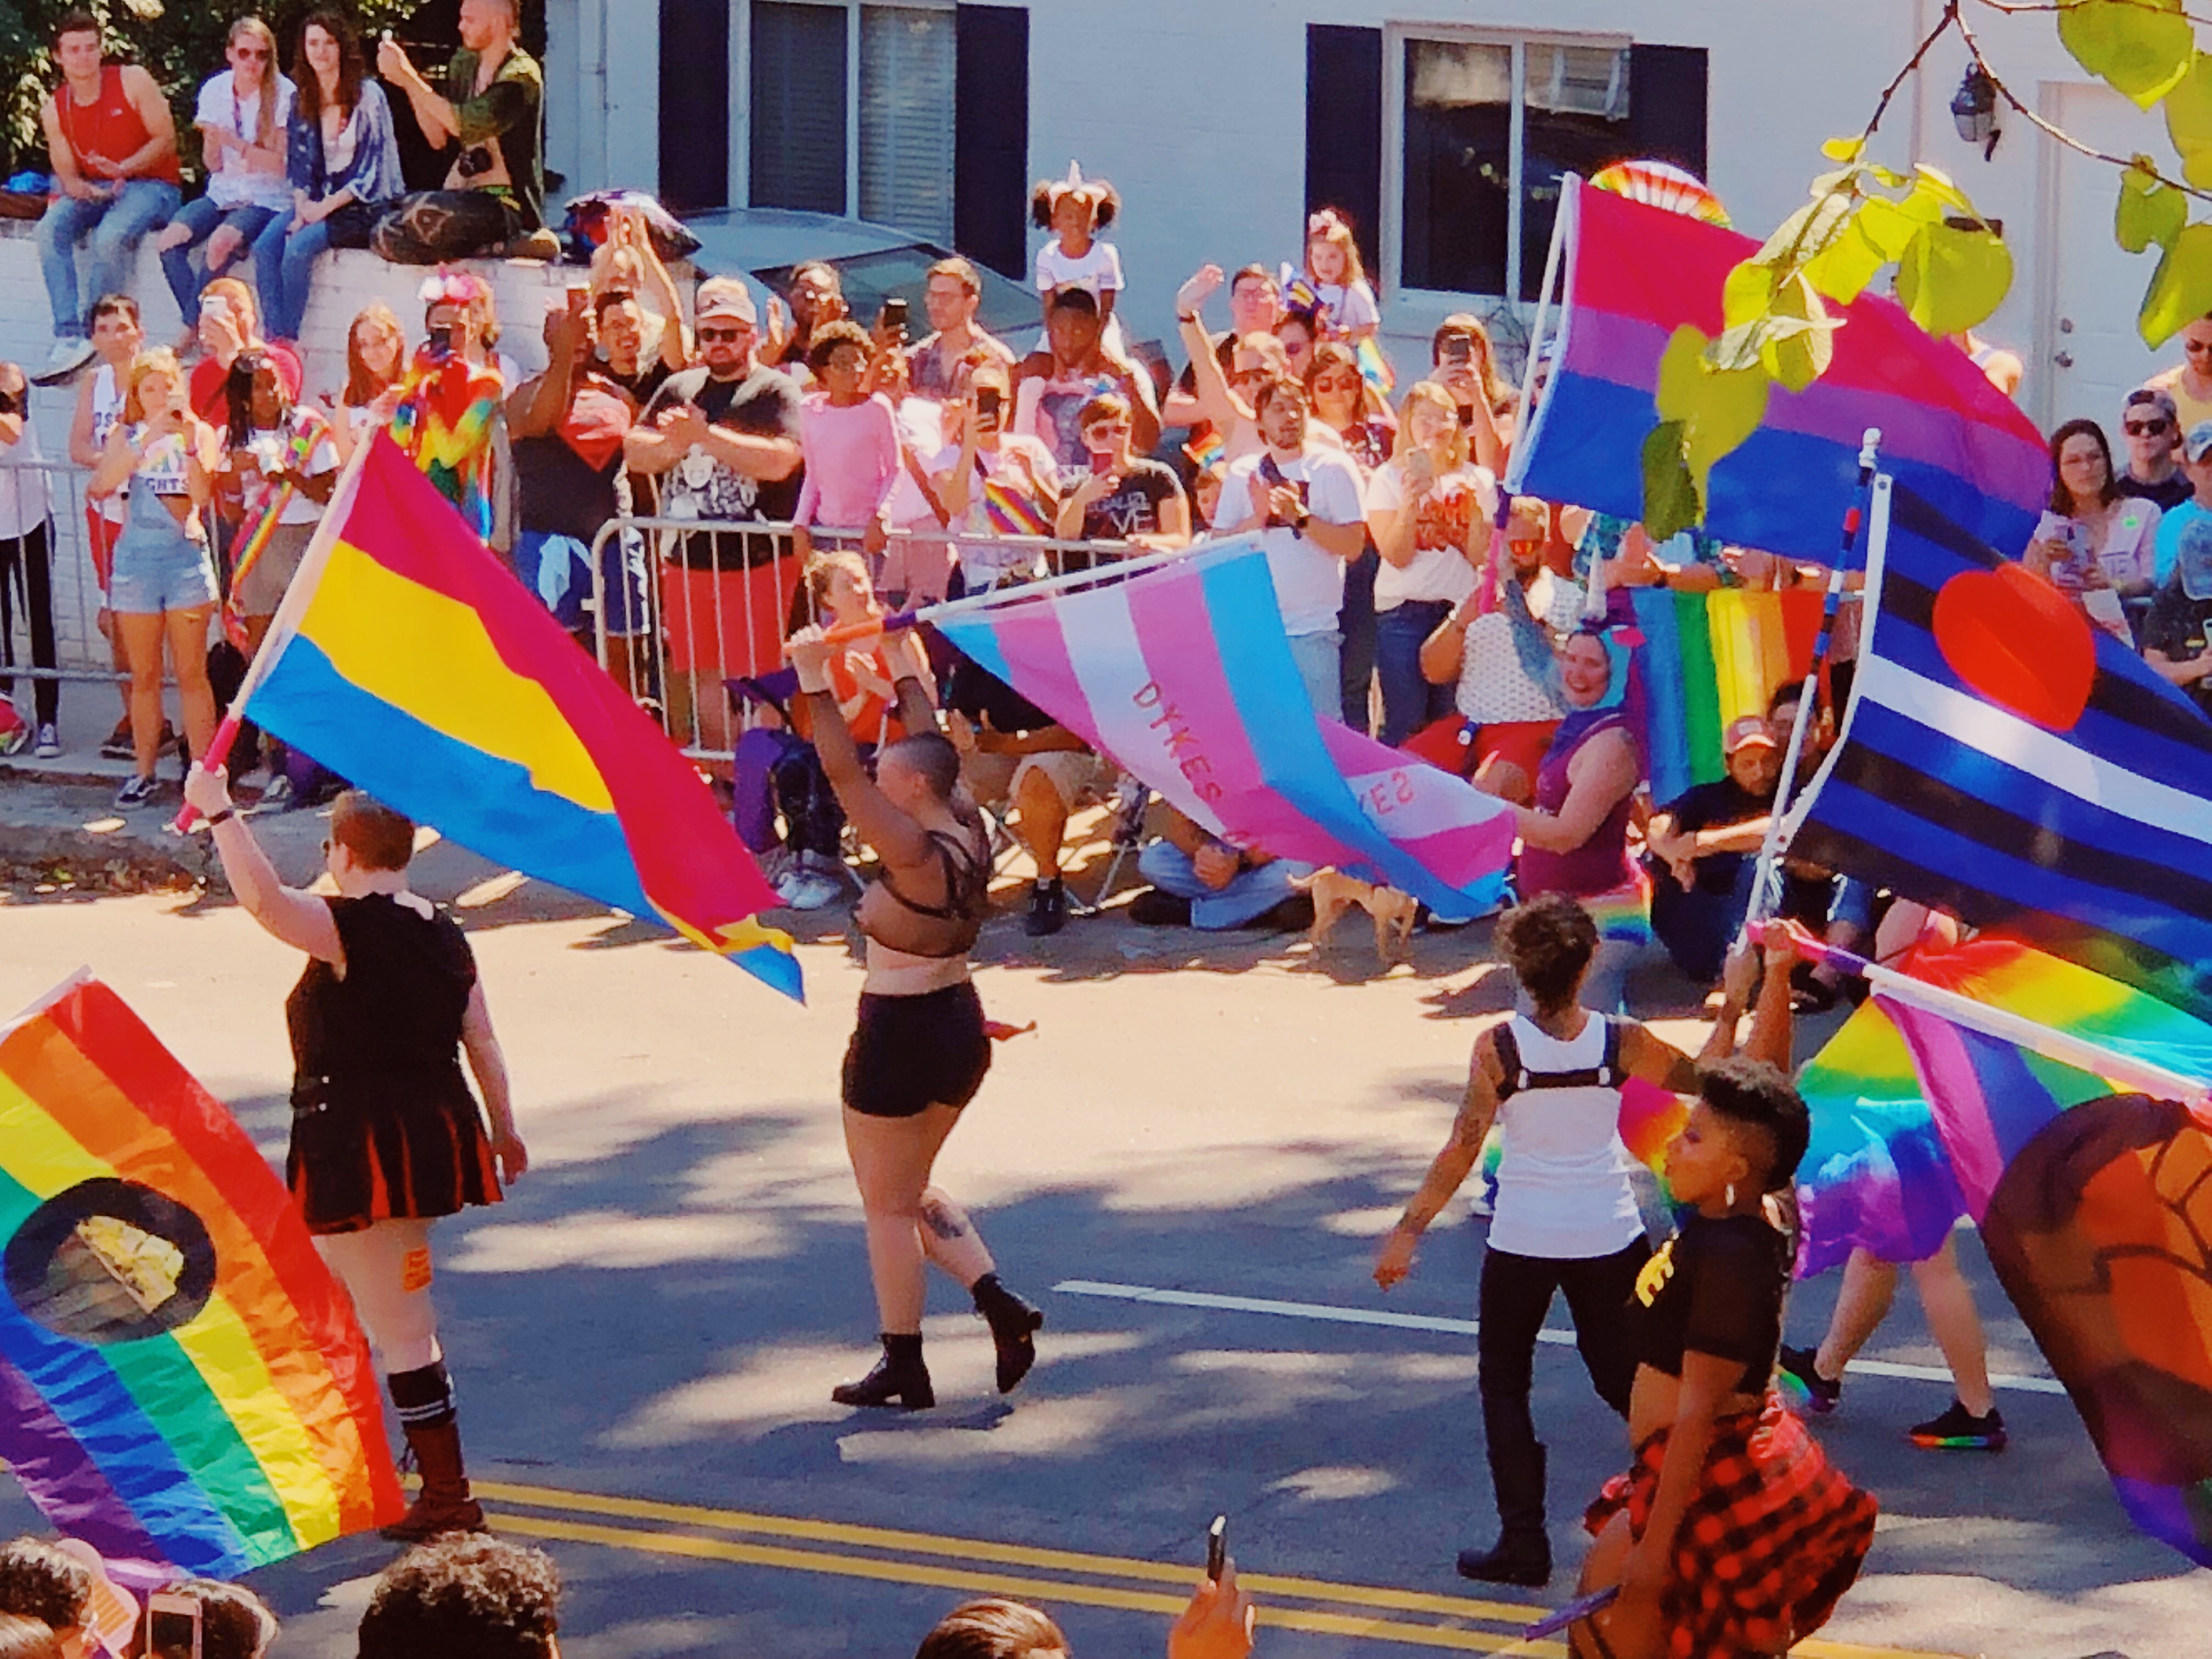 atlanta gay pride 2021 cancelled this year